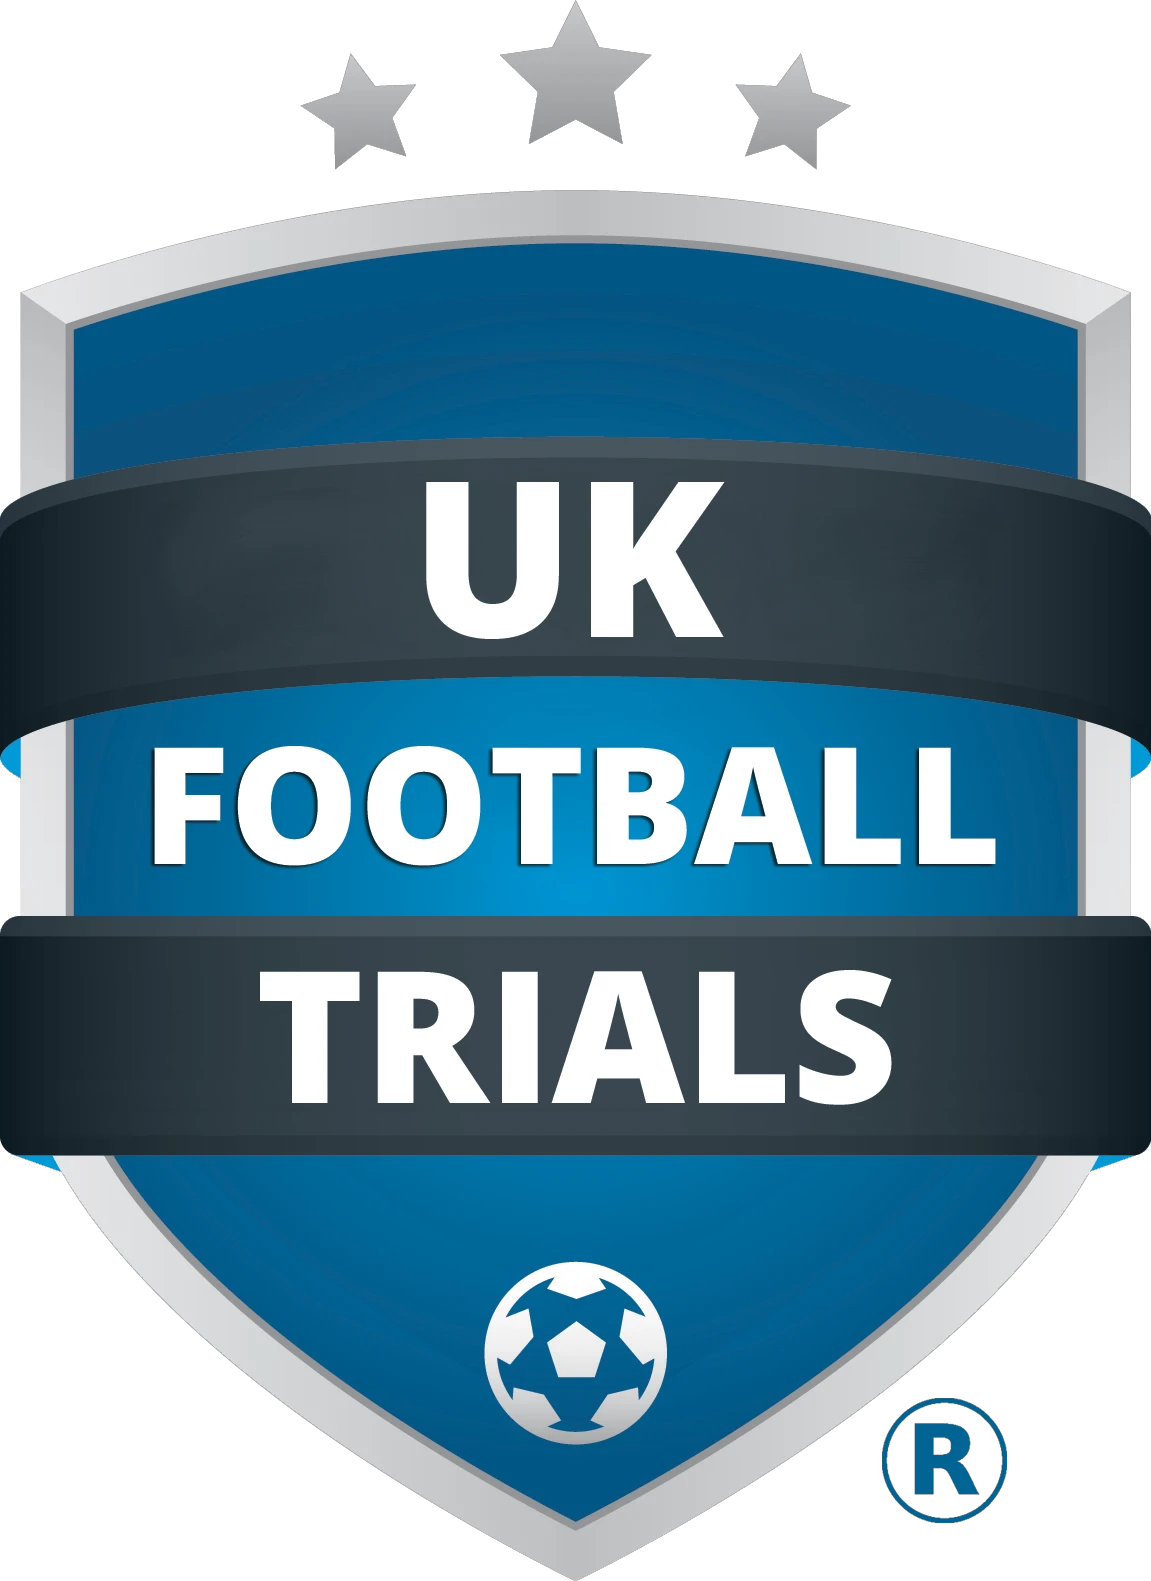 UK Football Trials promotions 